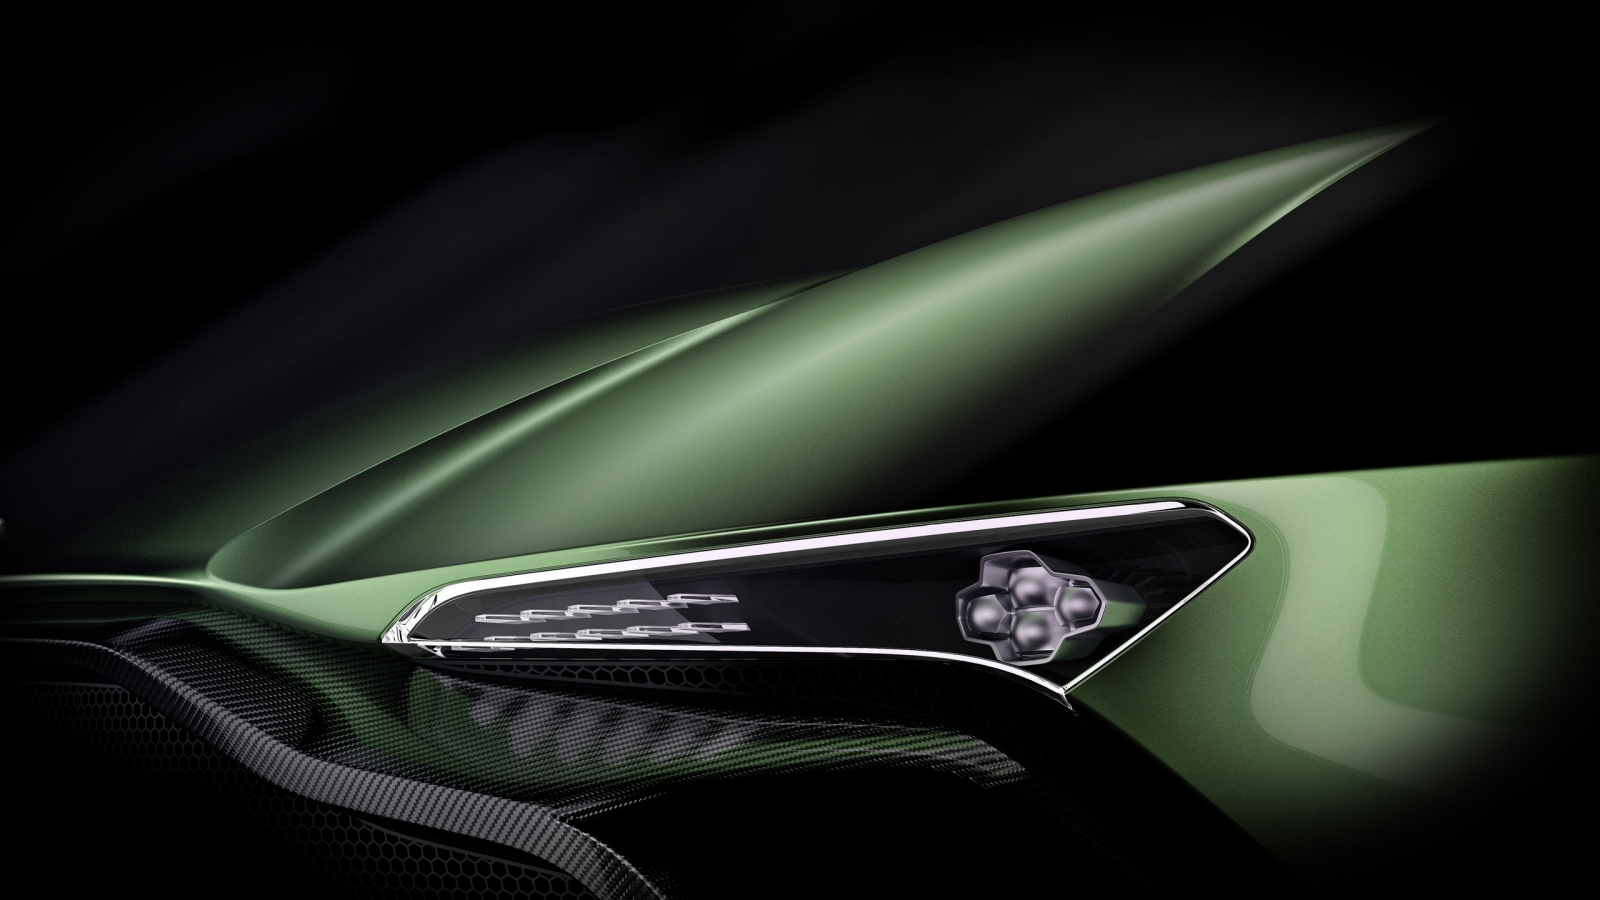 Aston Martin Vulcan Headlight for 1600 x 900 HDTV resolution